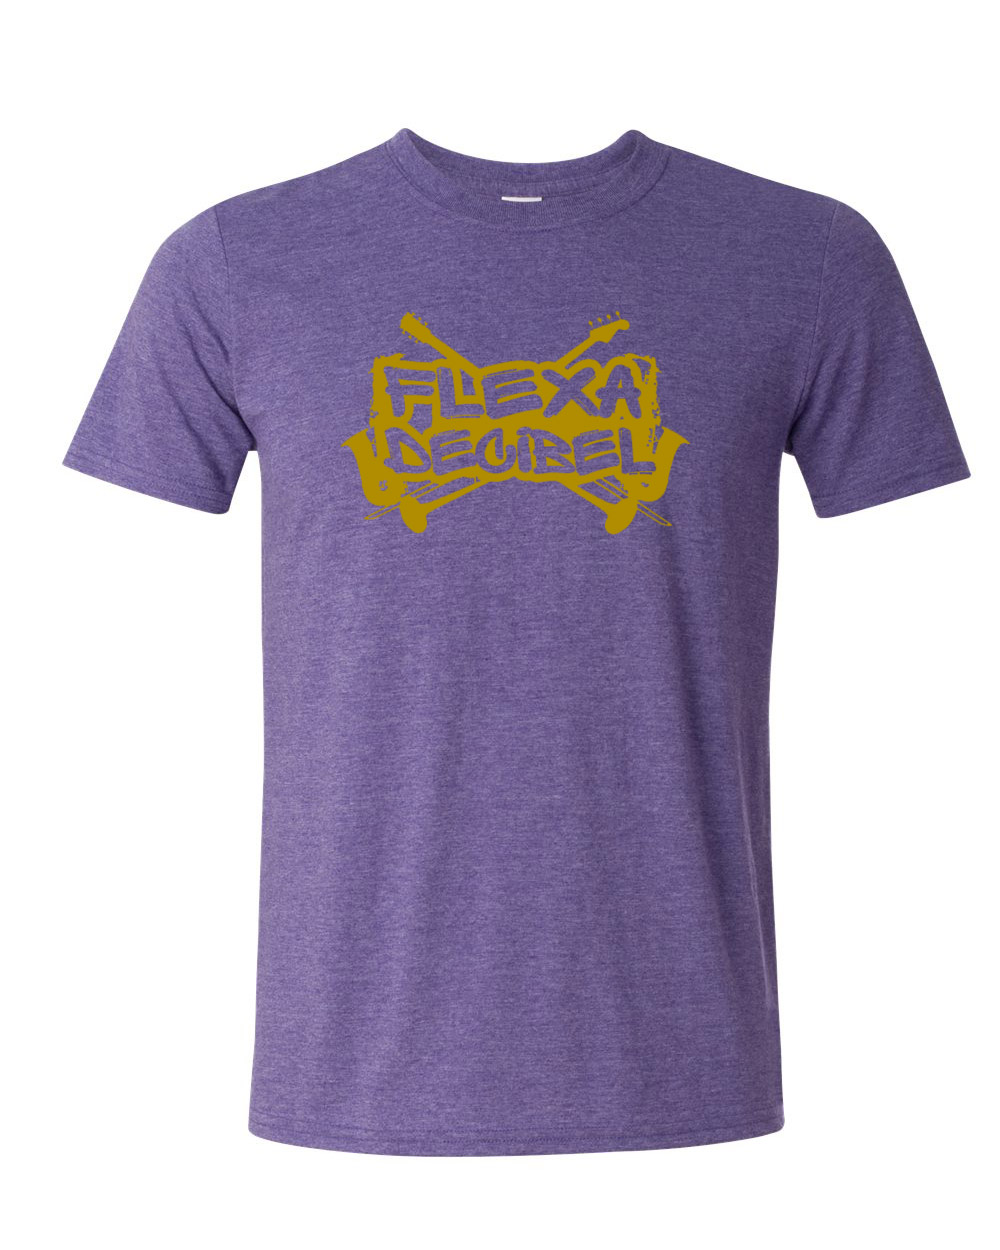 Purple/Gold Short-Sleeve T – Flexadecibel